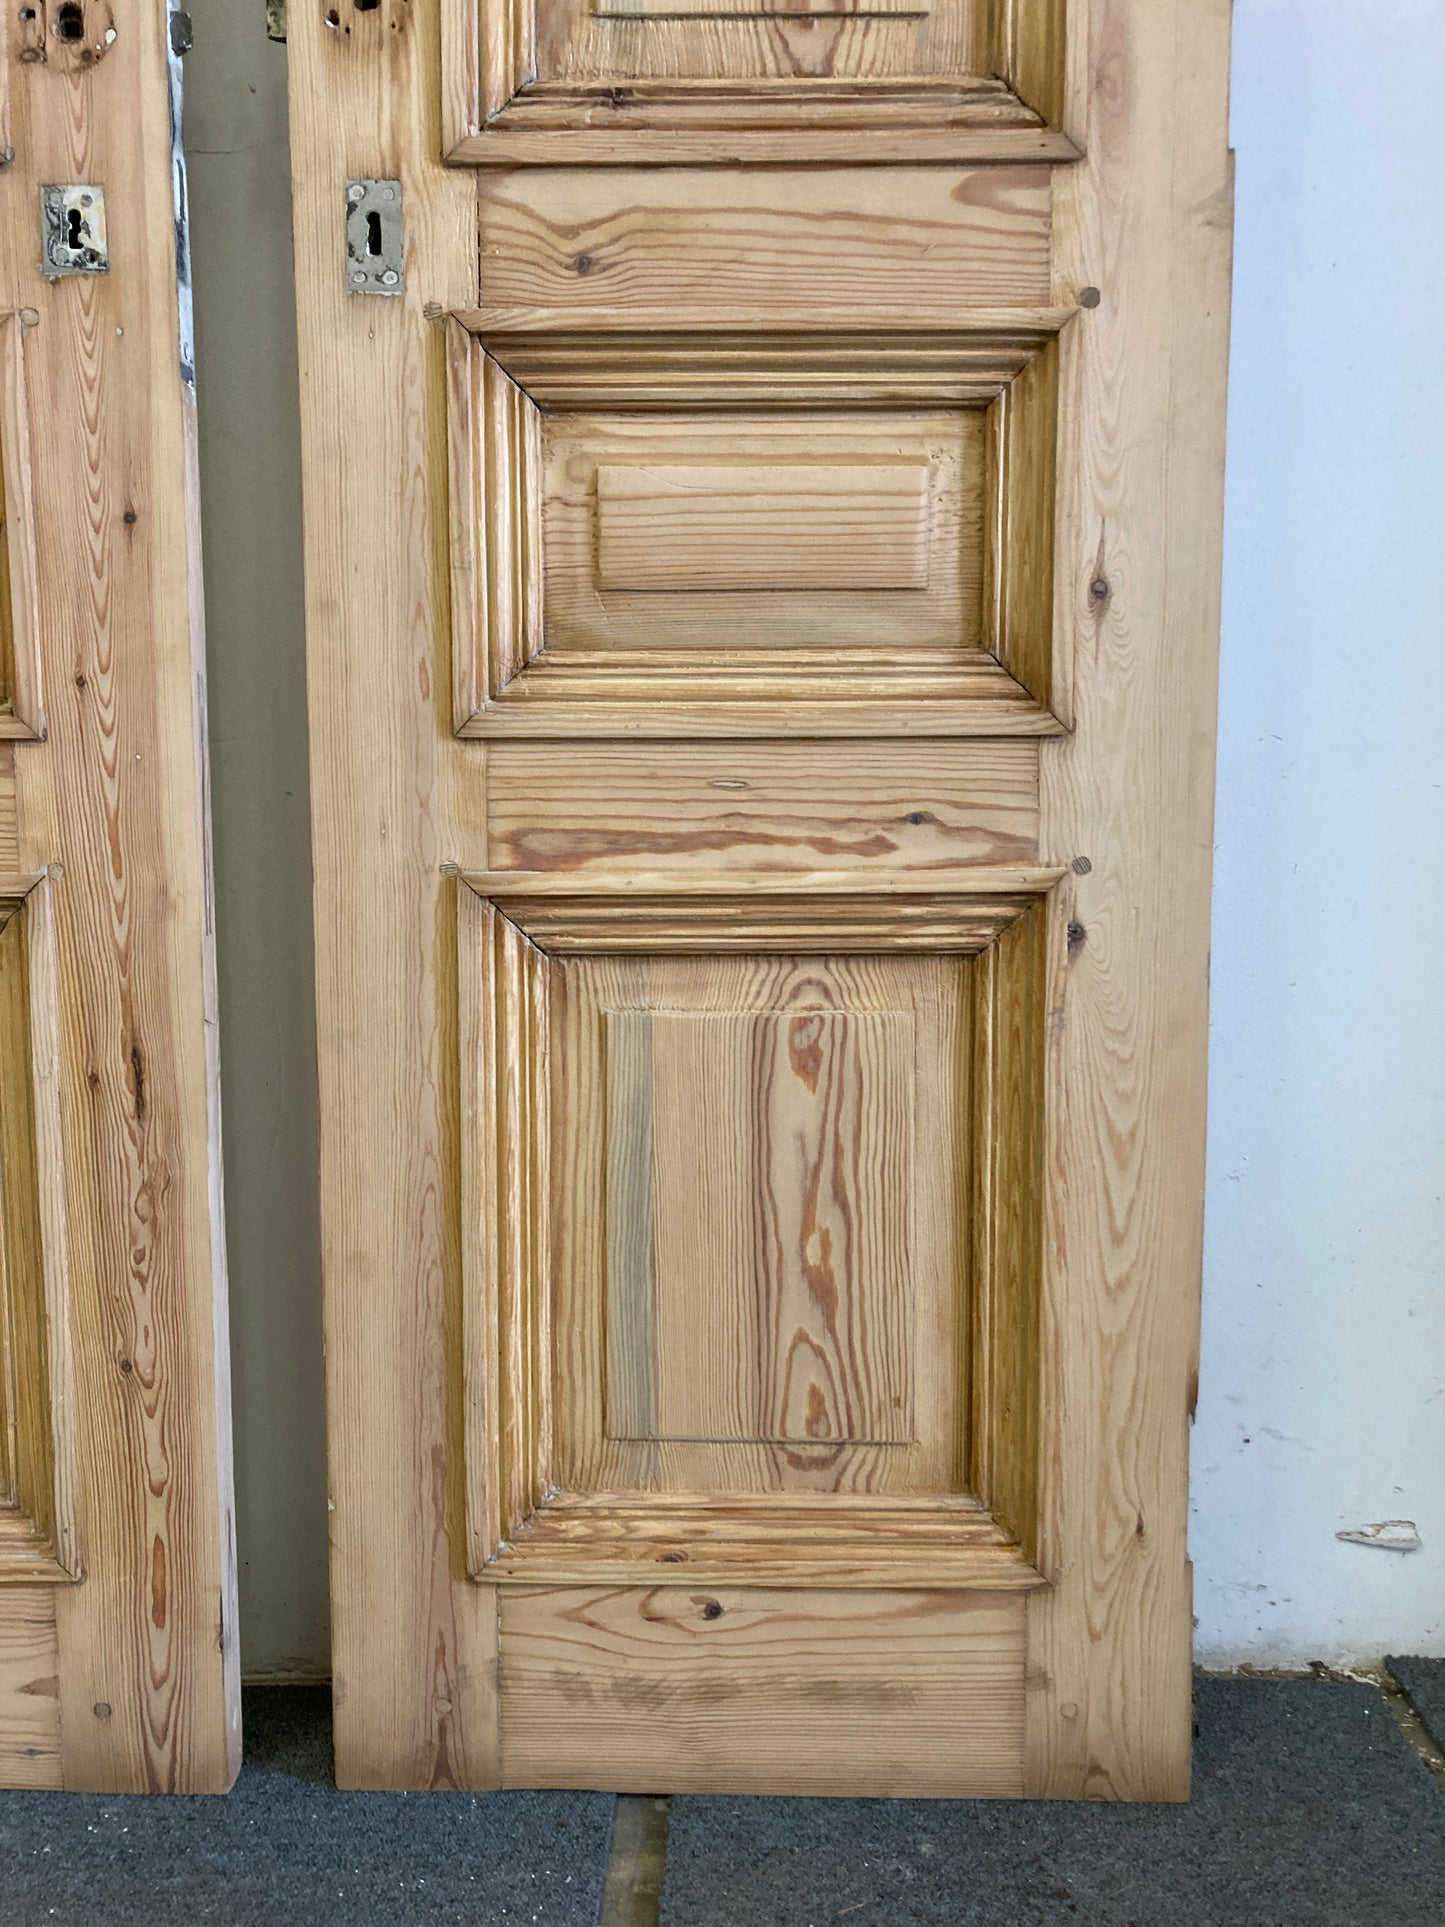 Dubbele houten binnendeur - afgeschuurd (198 x 56)